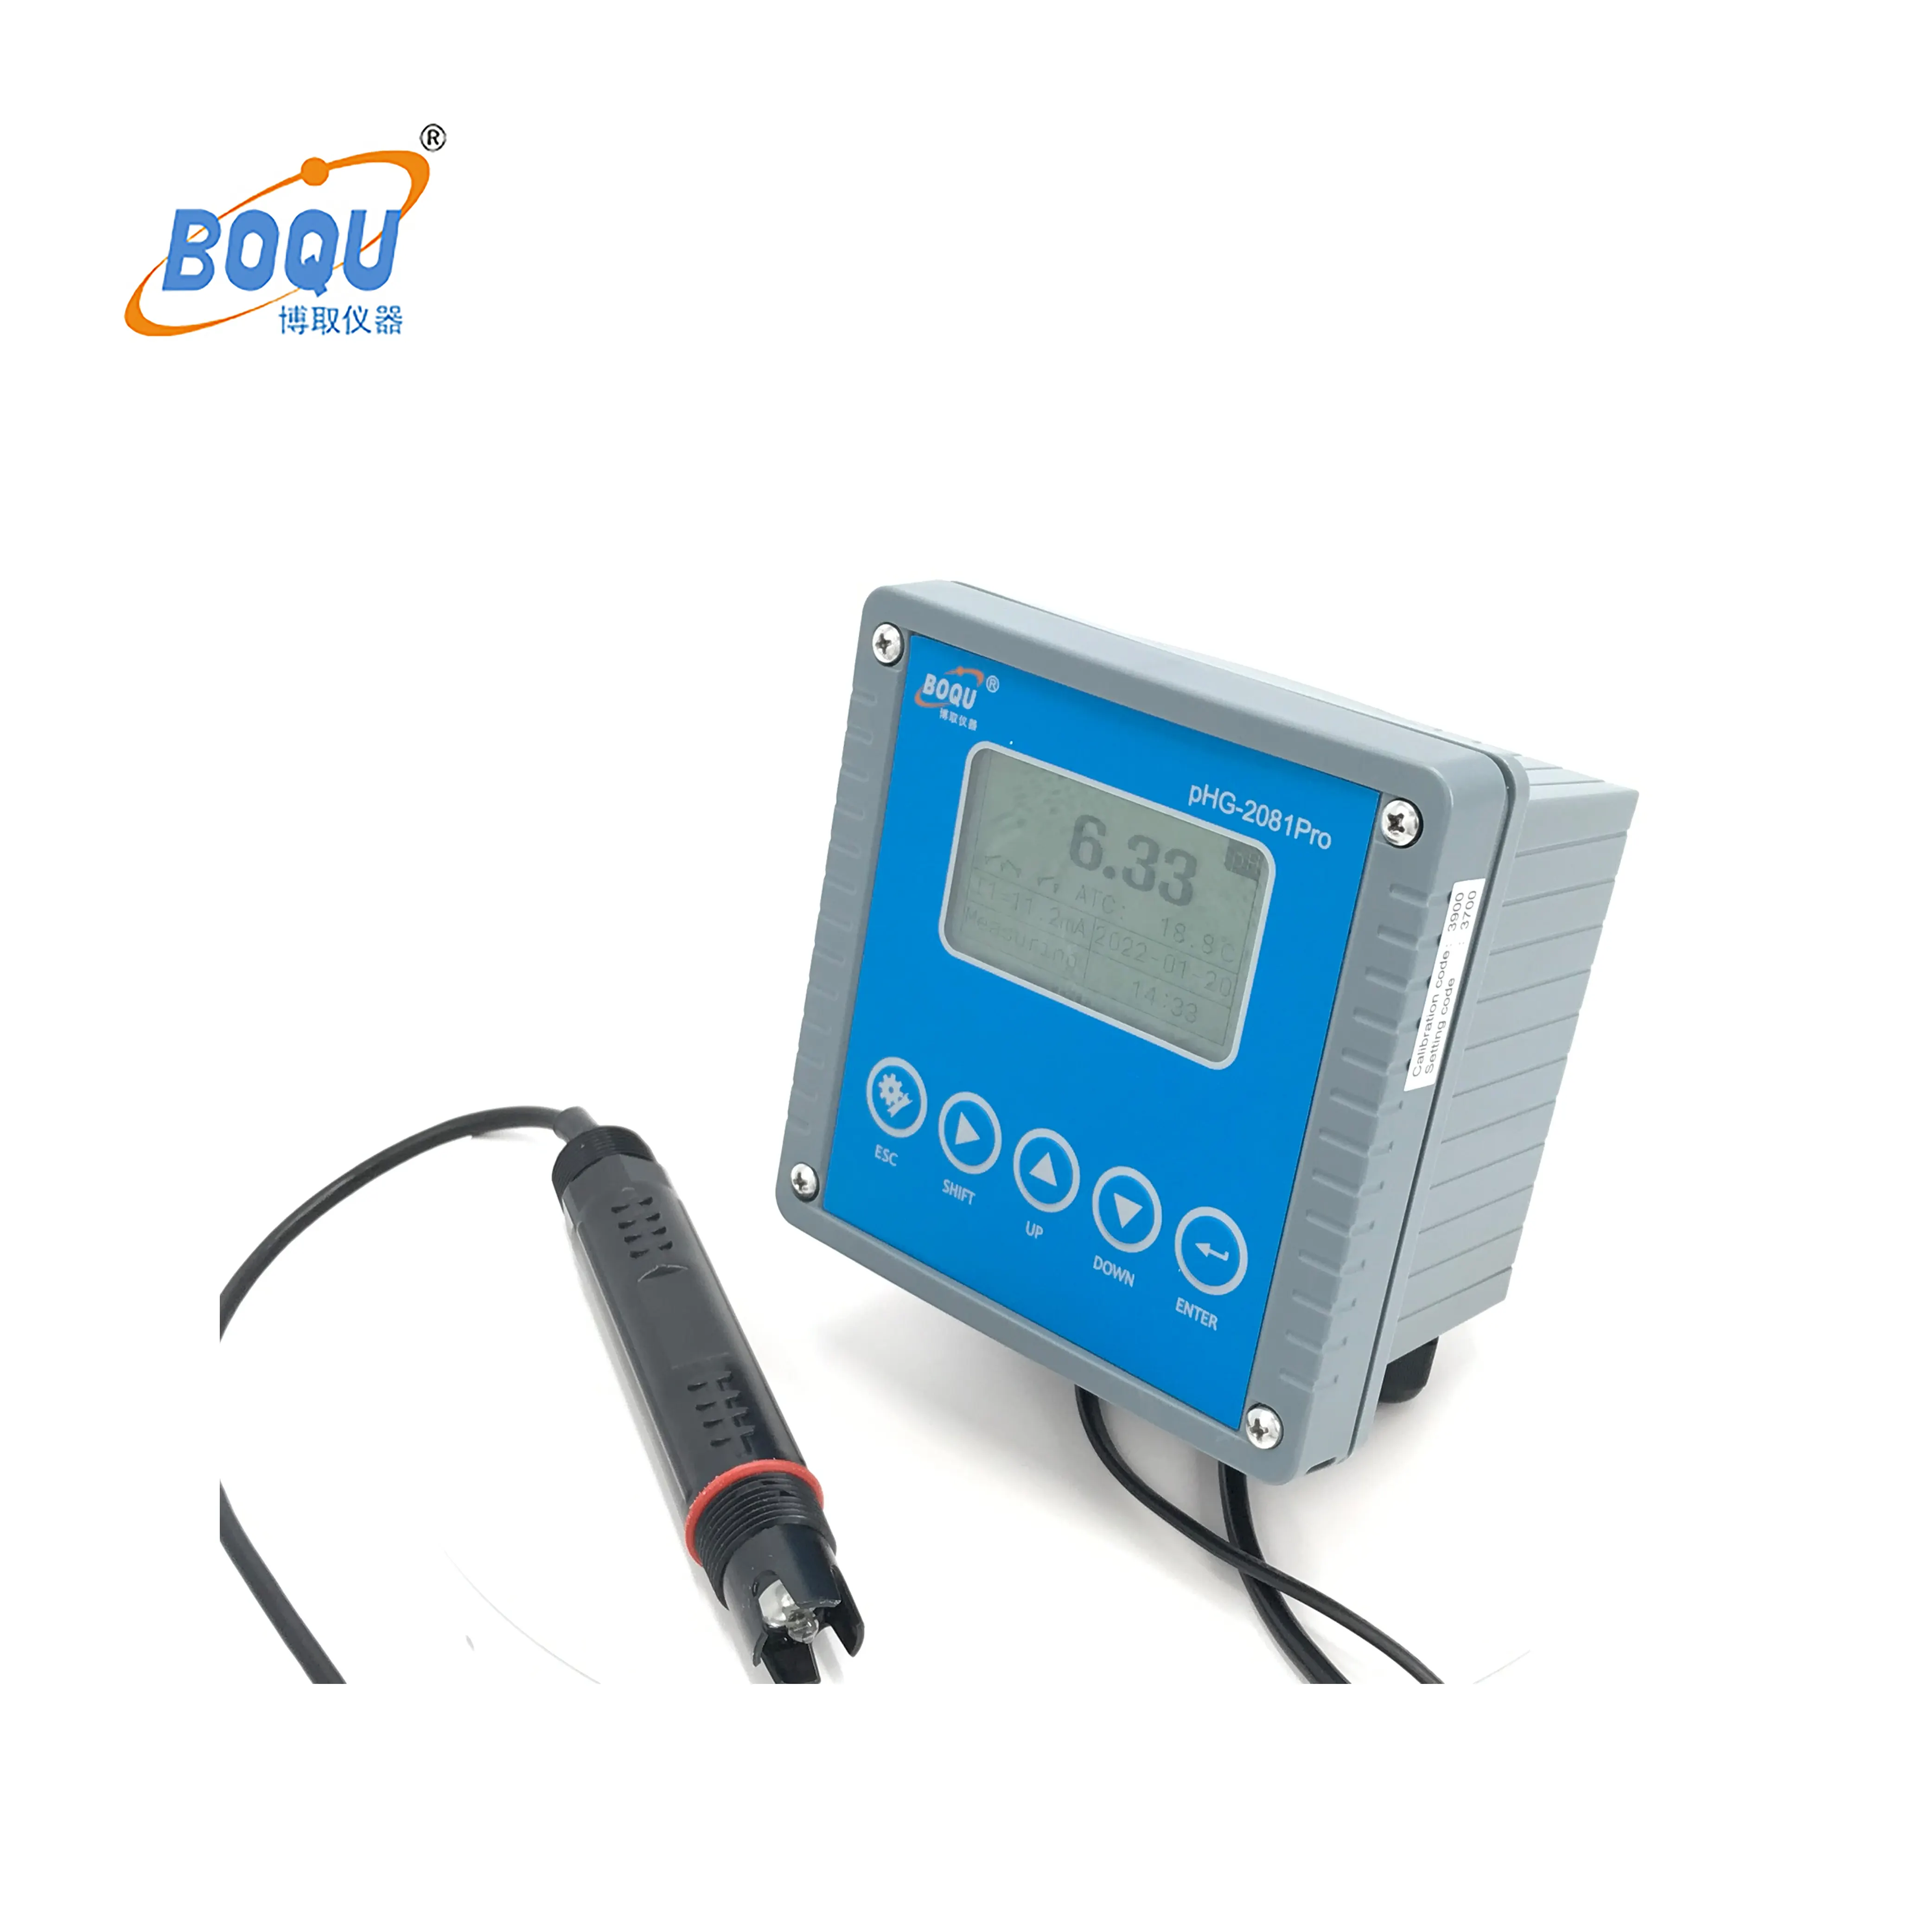 BOQU pHG-2081pro digital ph/orp electronic ph metering meter smart sensor pH measure controller pool analyzer for chemicals